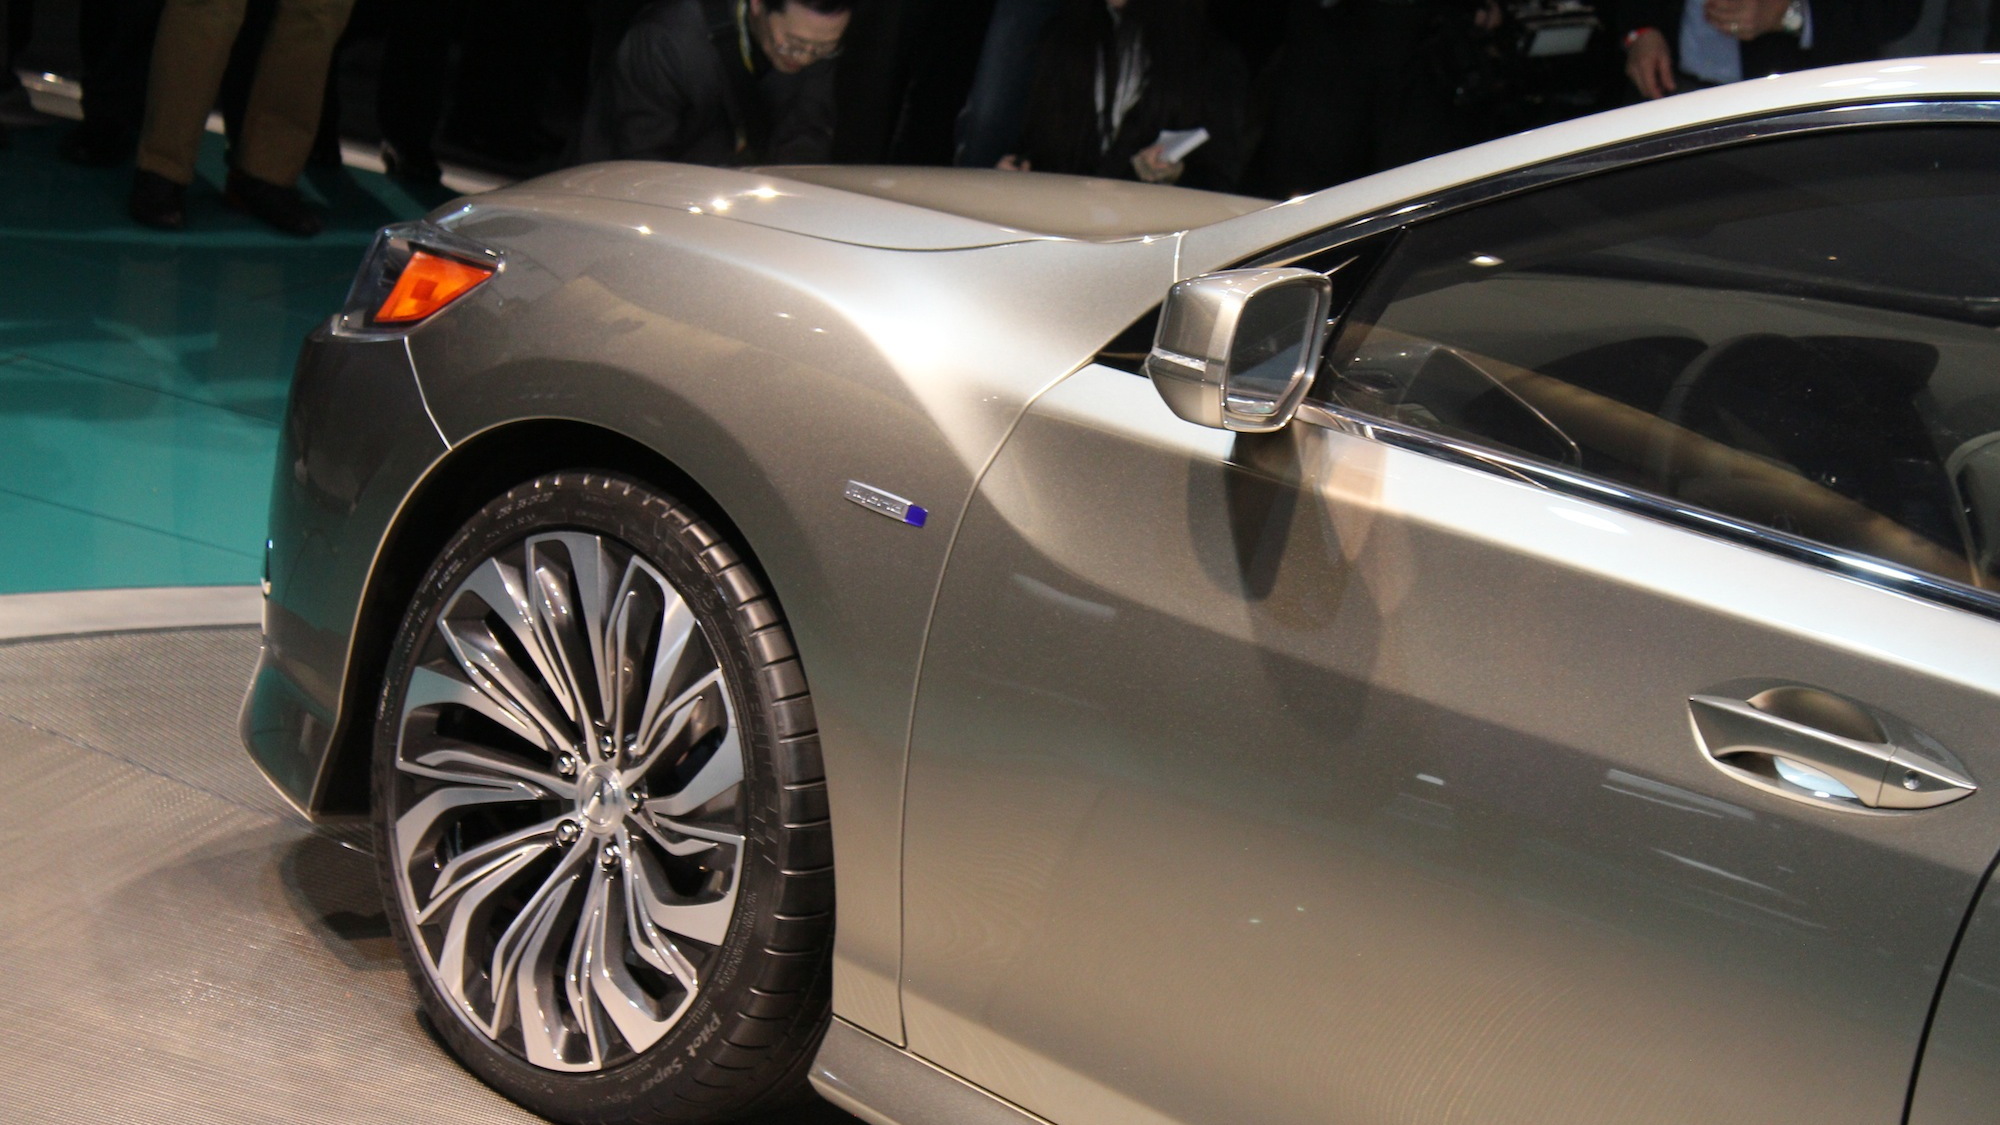 2014 Acura RLX Concept, 2012 New York Auto Show